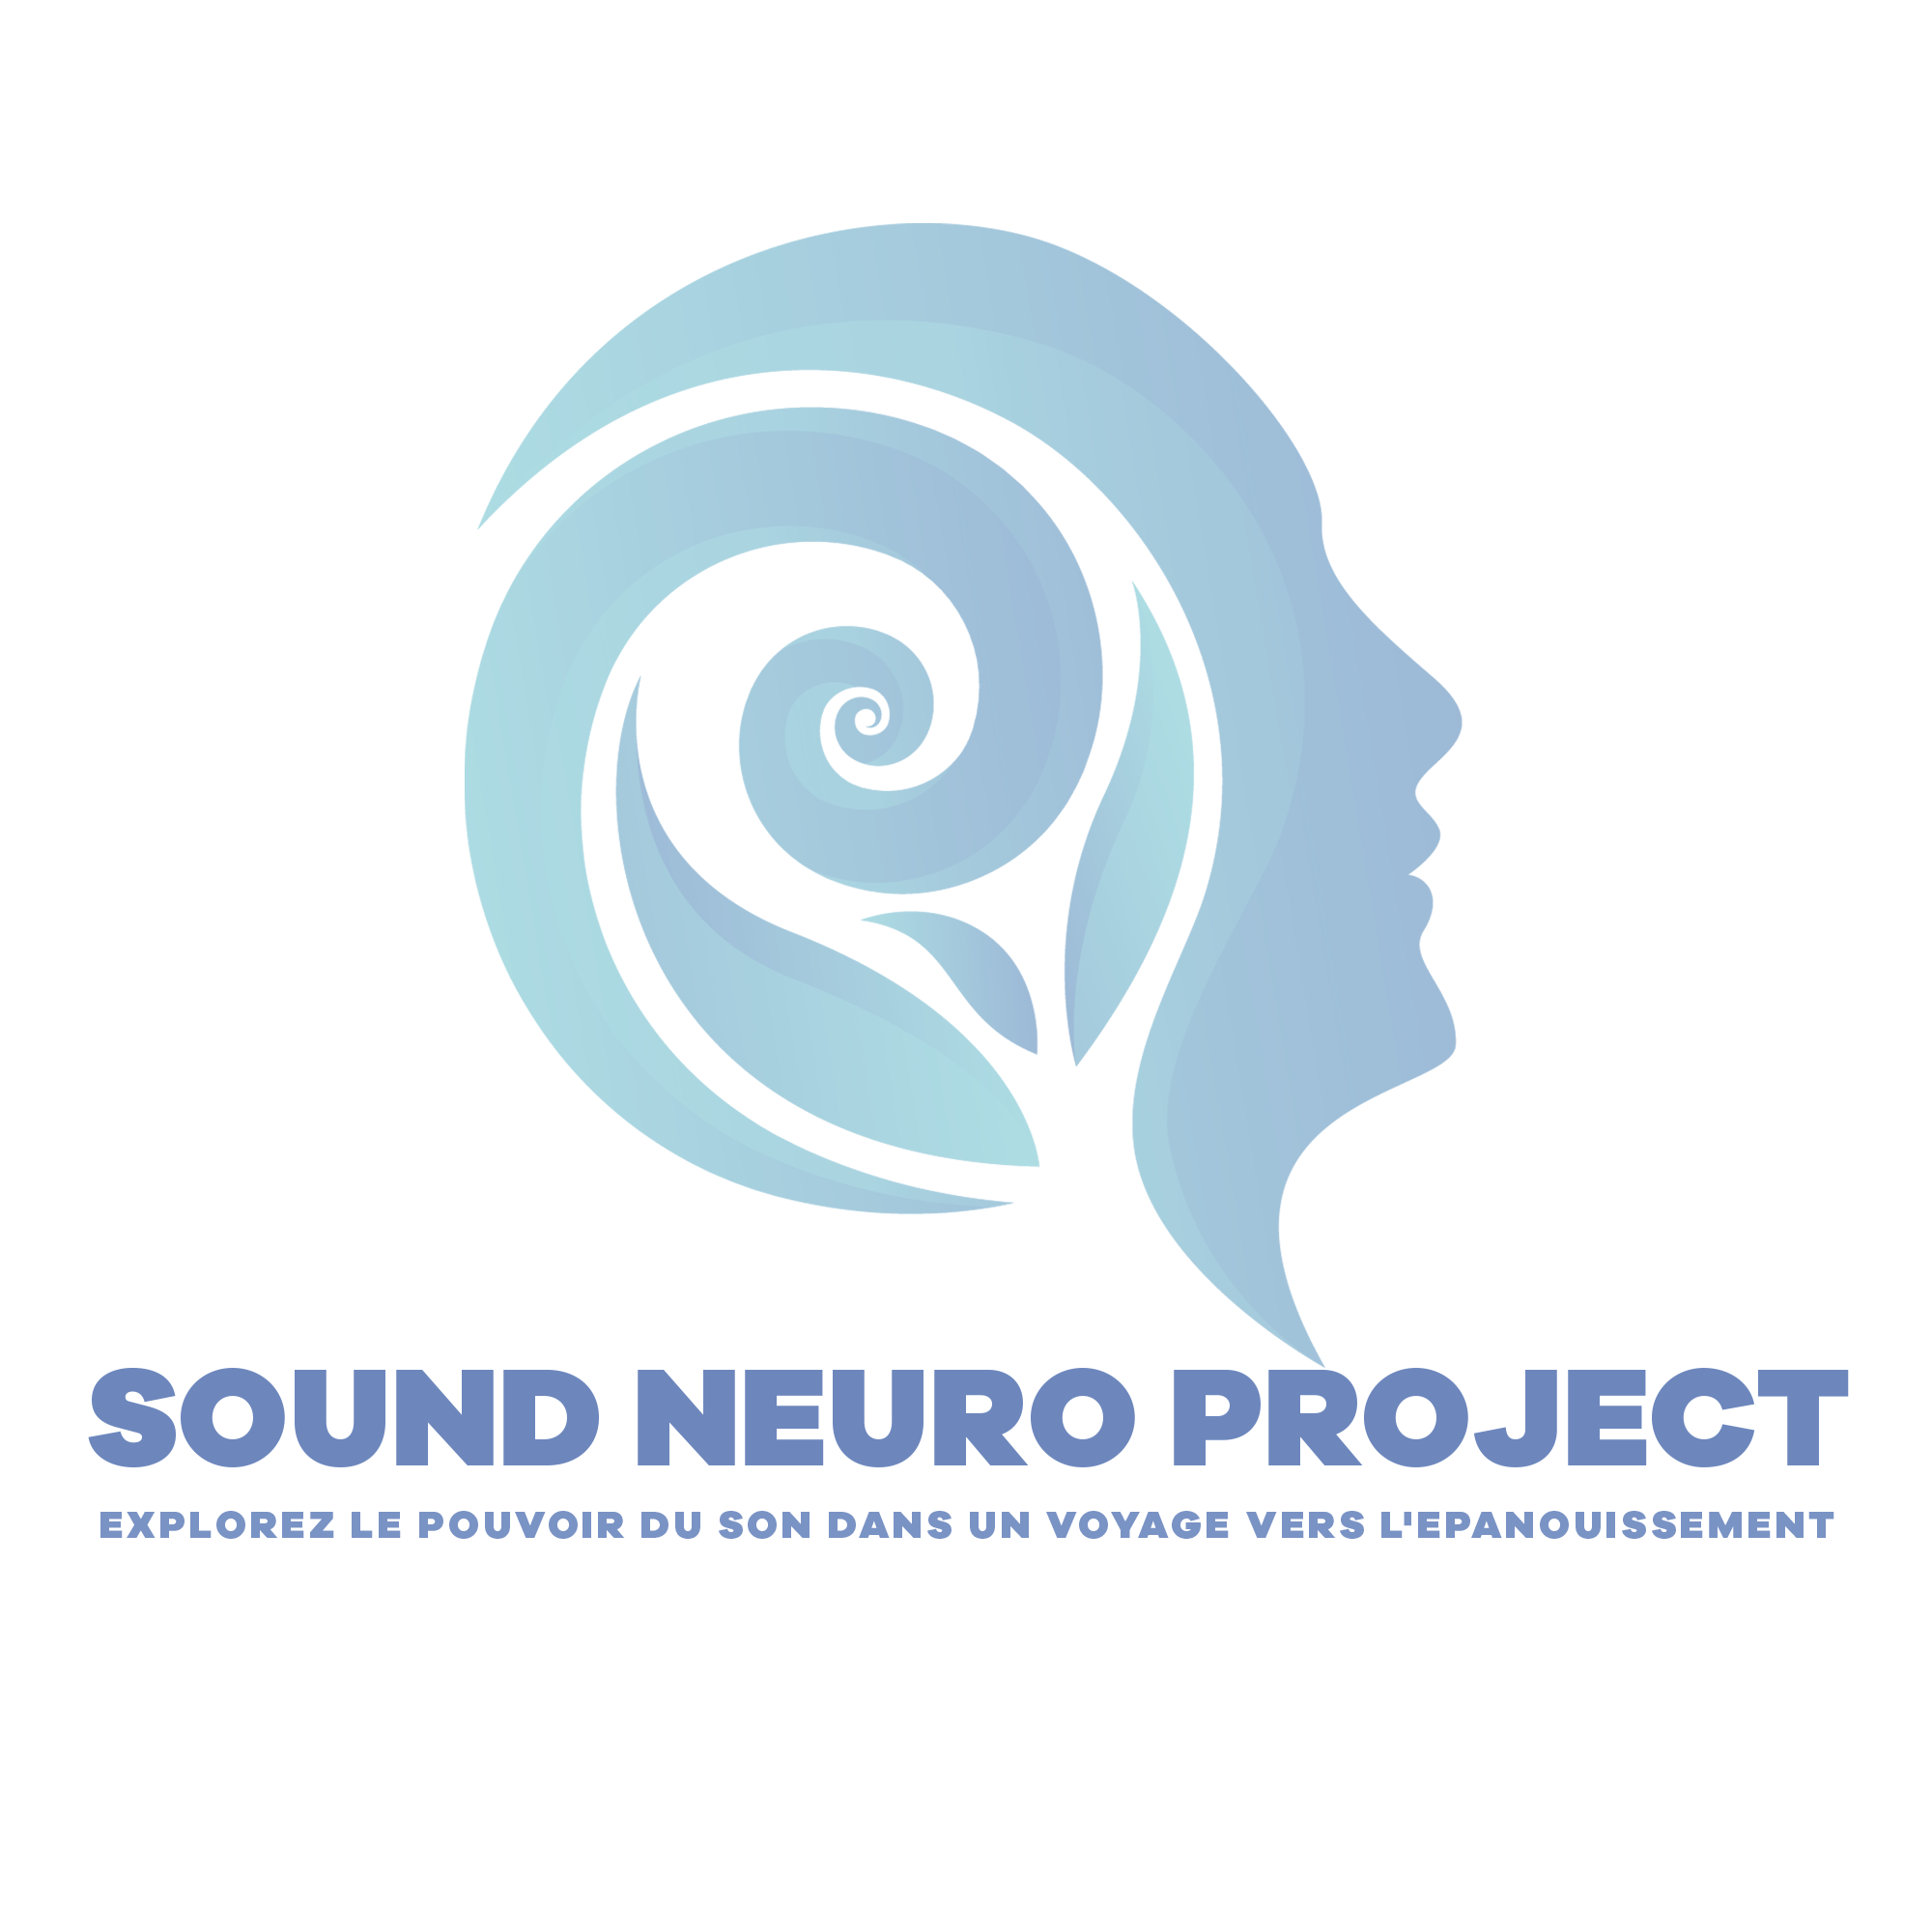 Sound Neuro Project